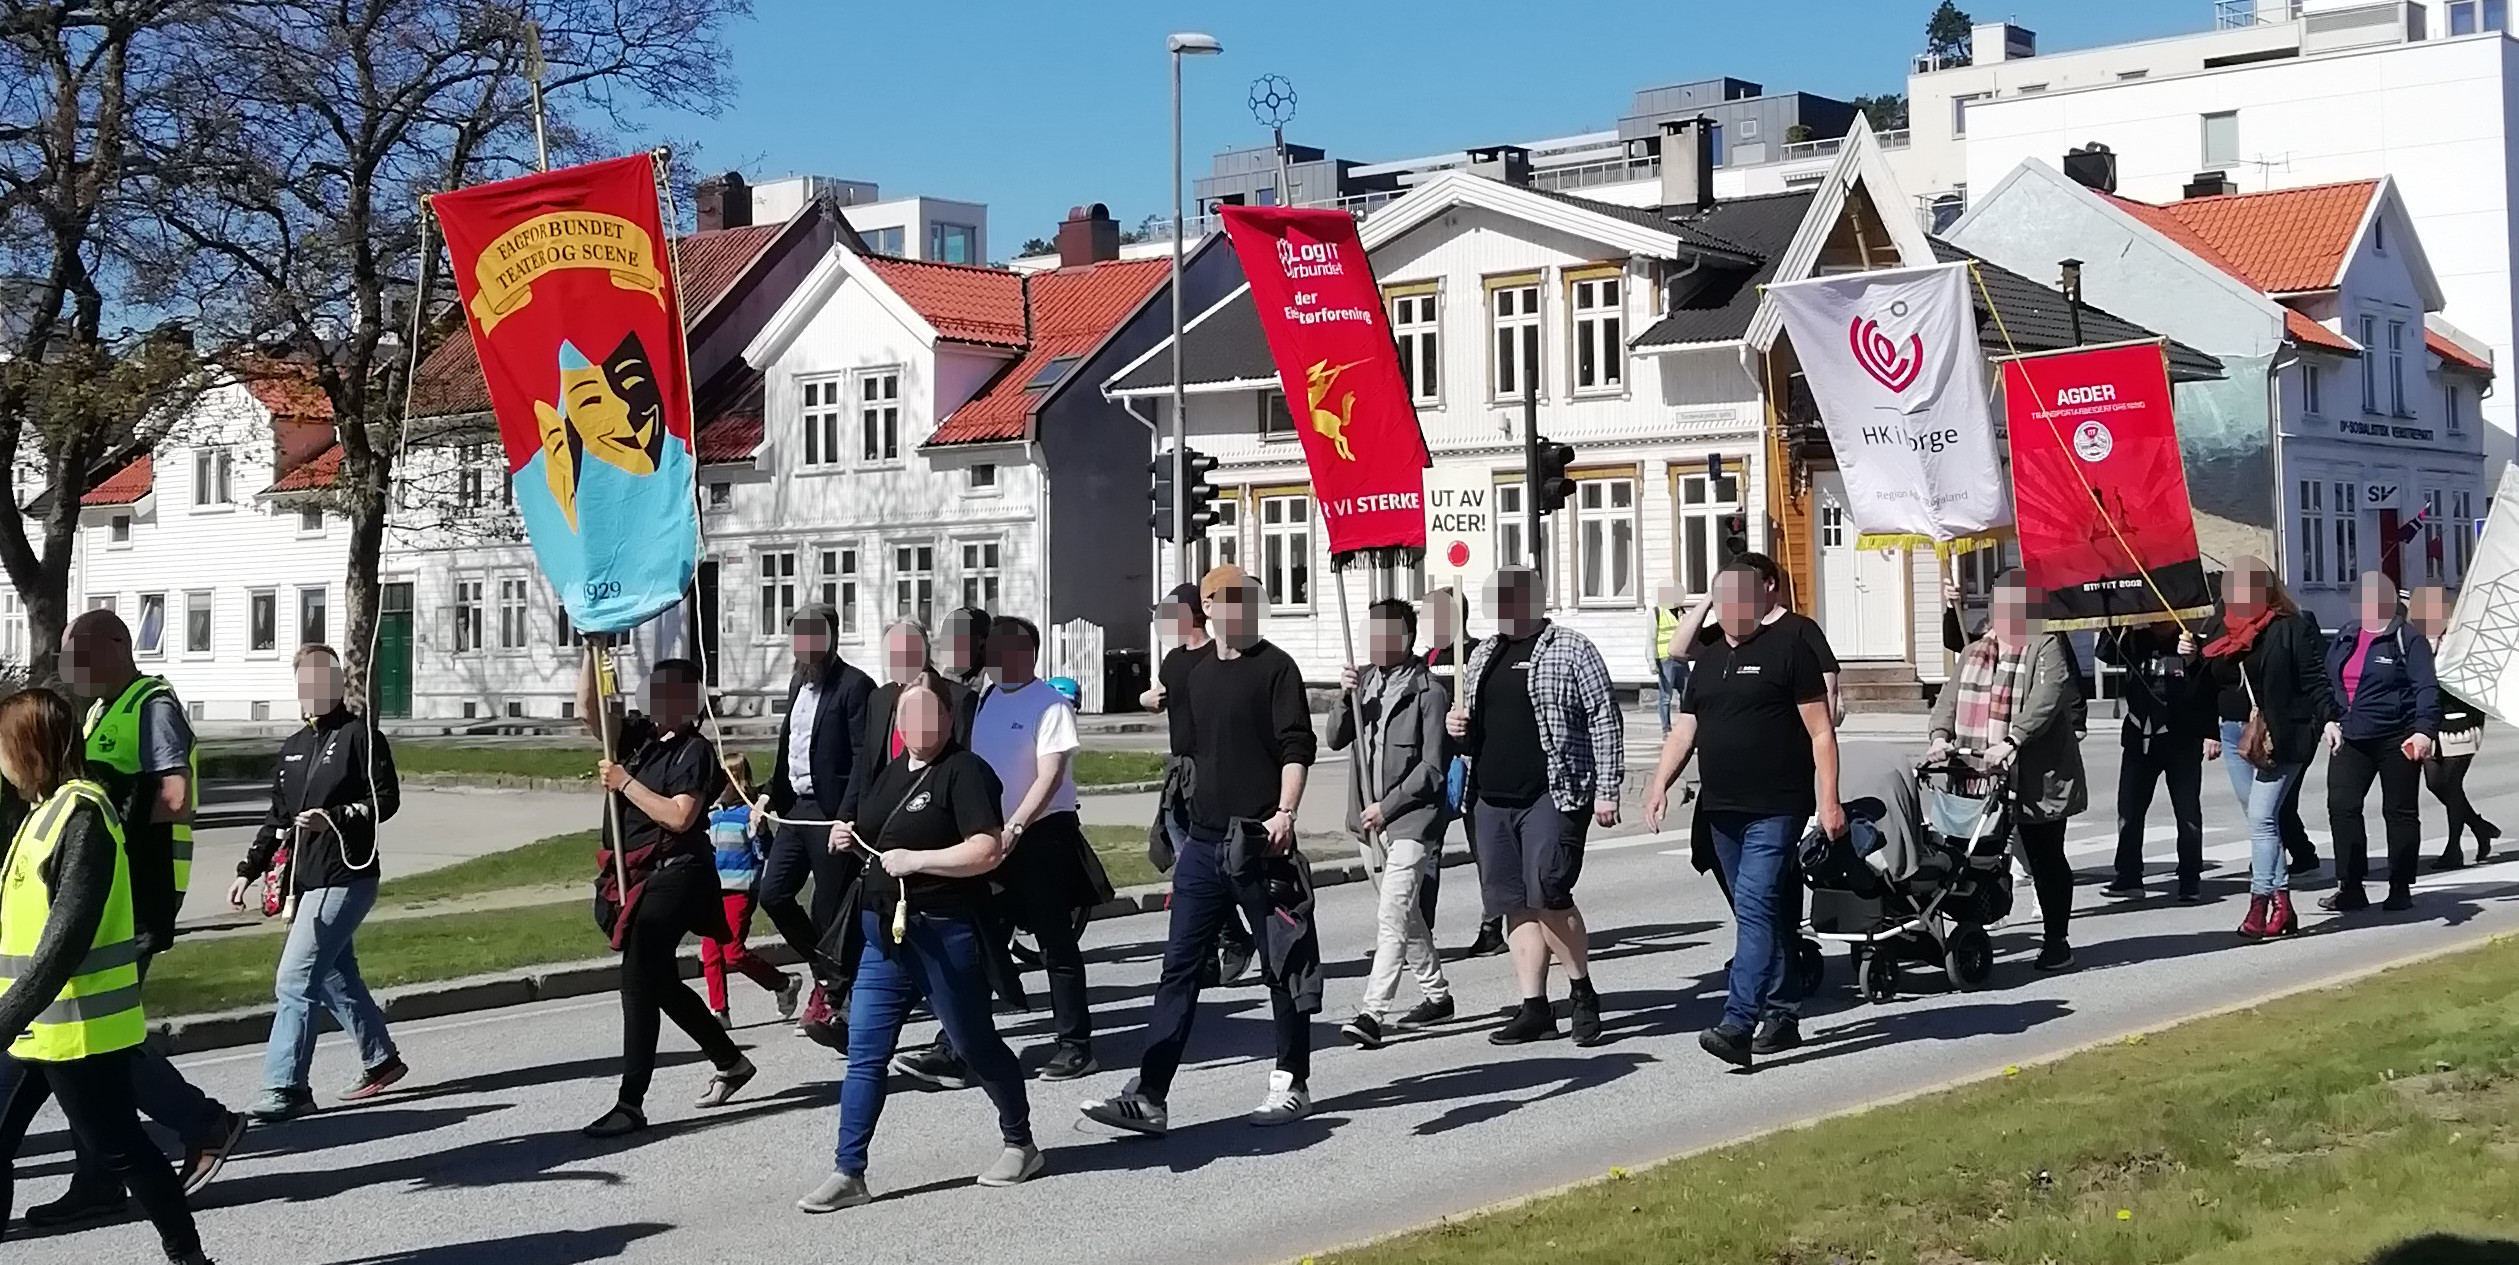 Gathering in Kristiansand